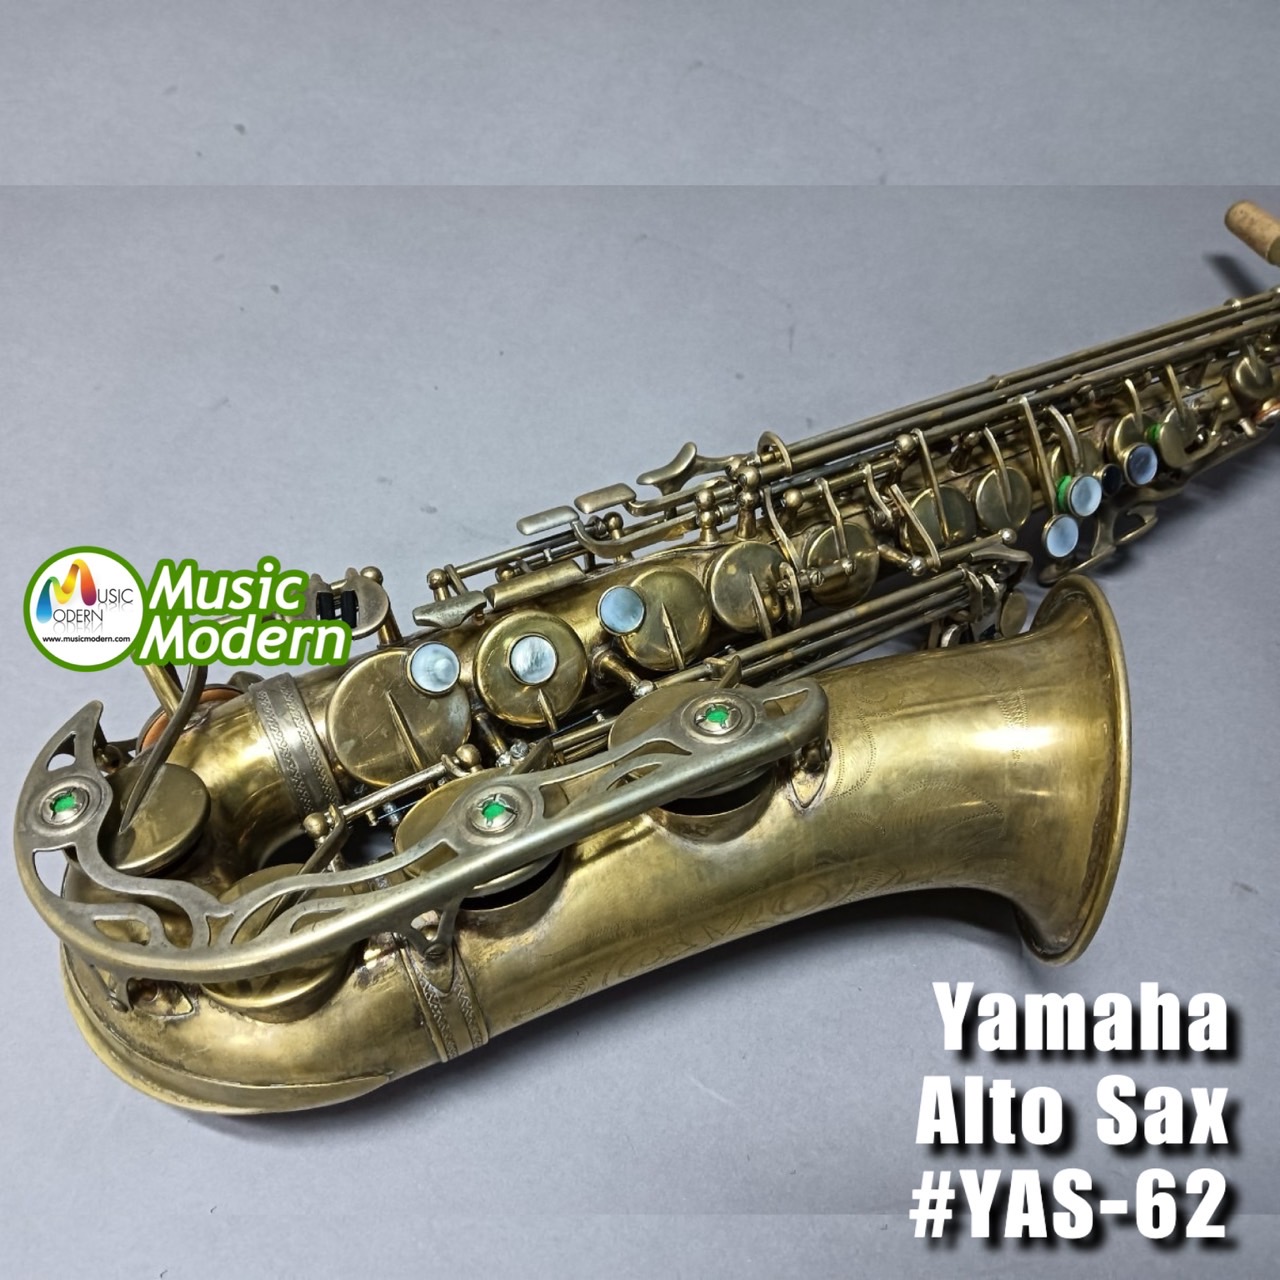 Yamaha Alto Saxophone YAS-62 (Japan